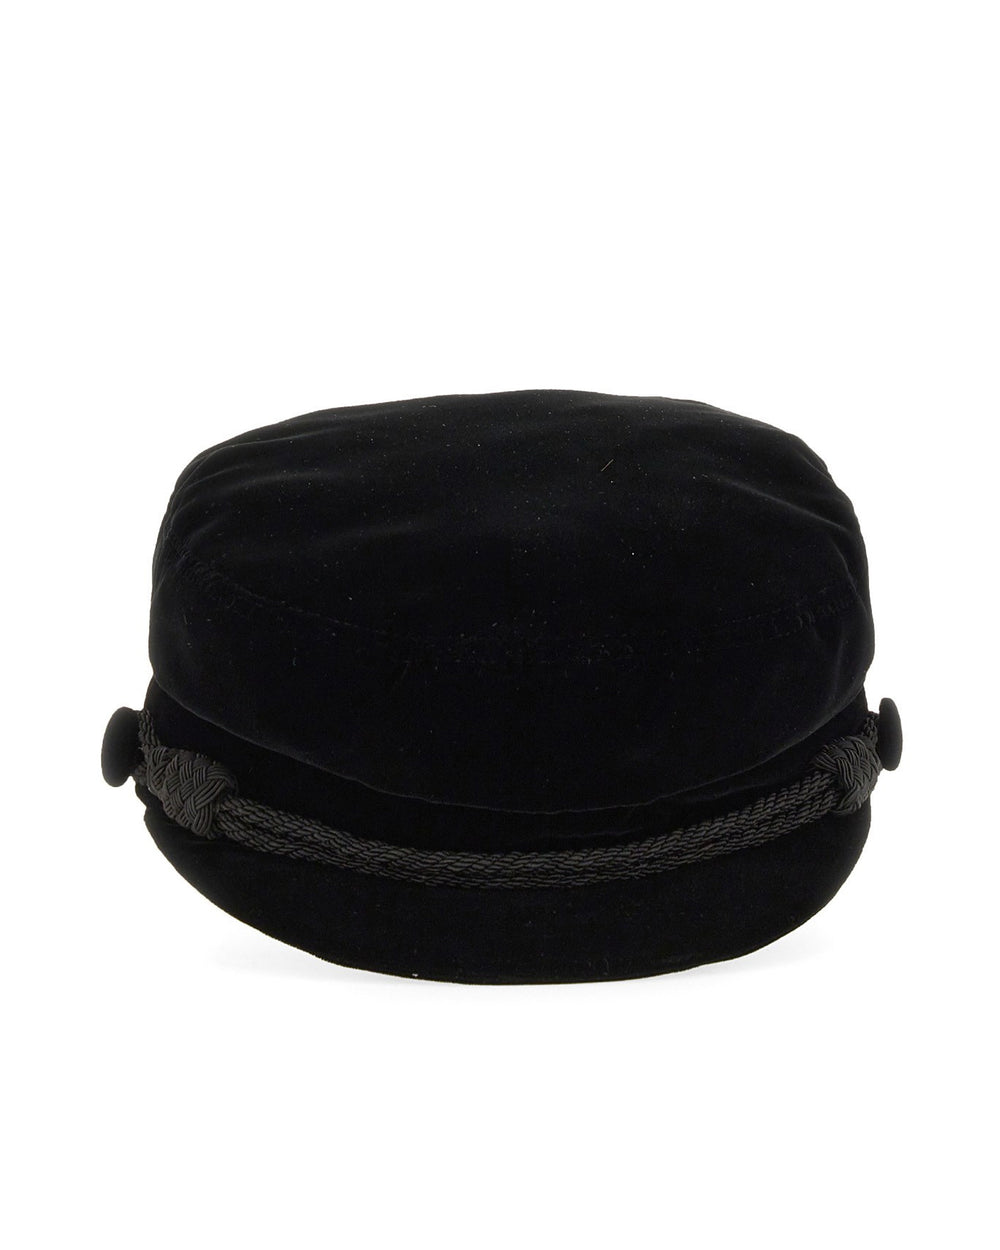 Saint Laurent Casquette de Marin velvet hat